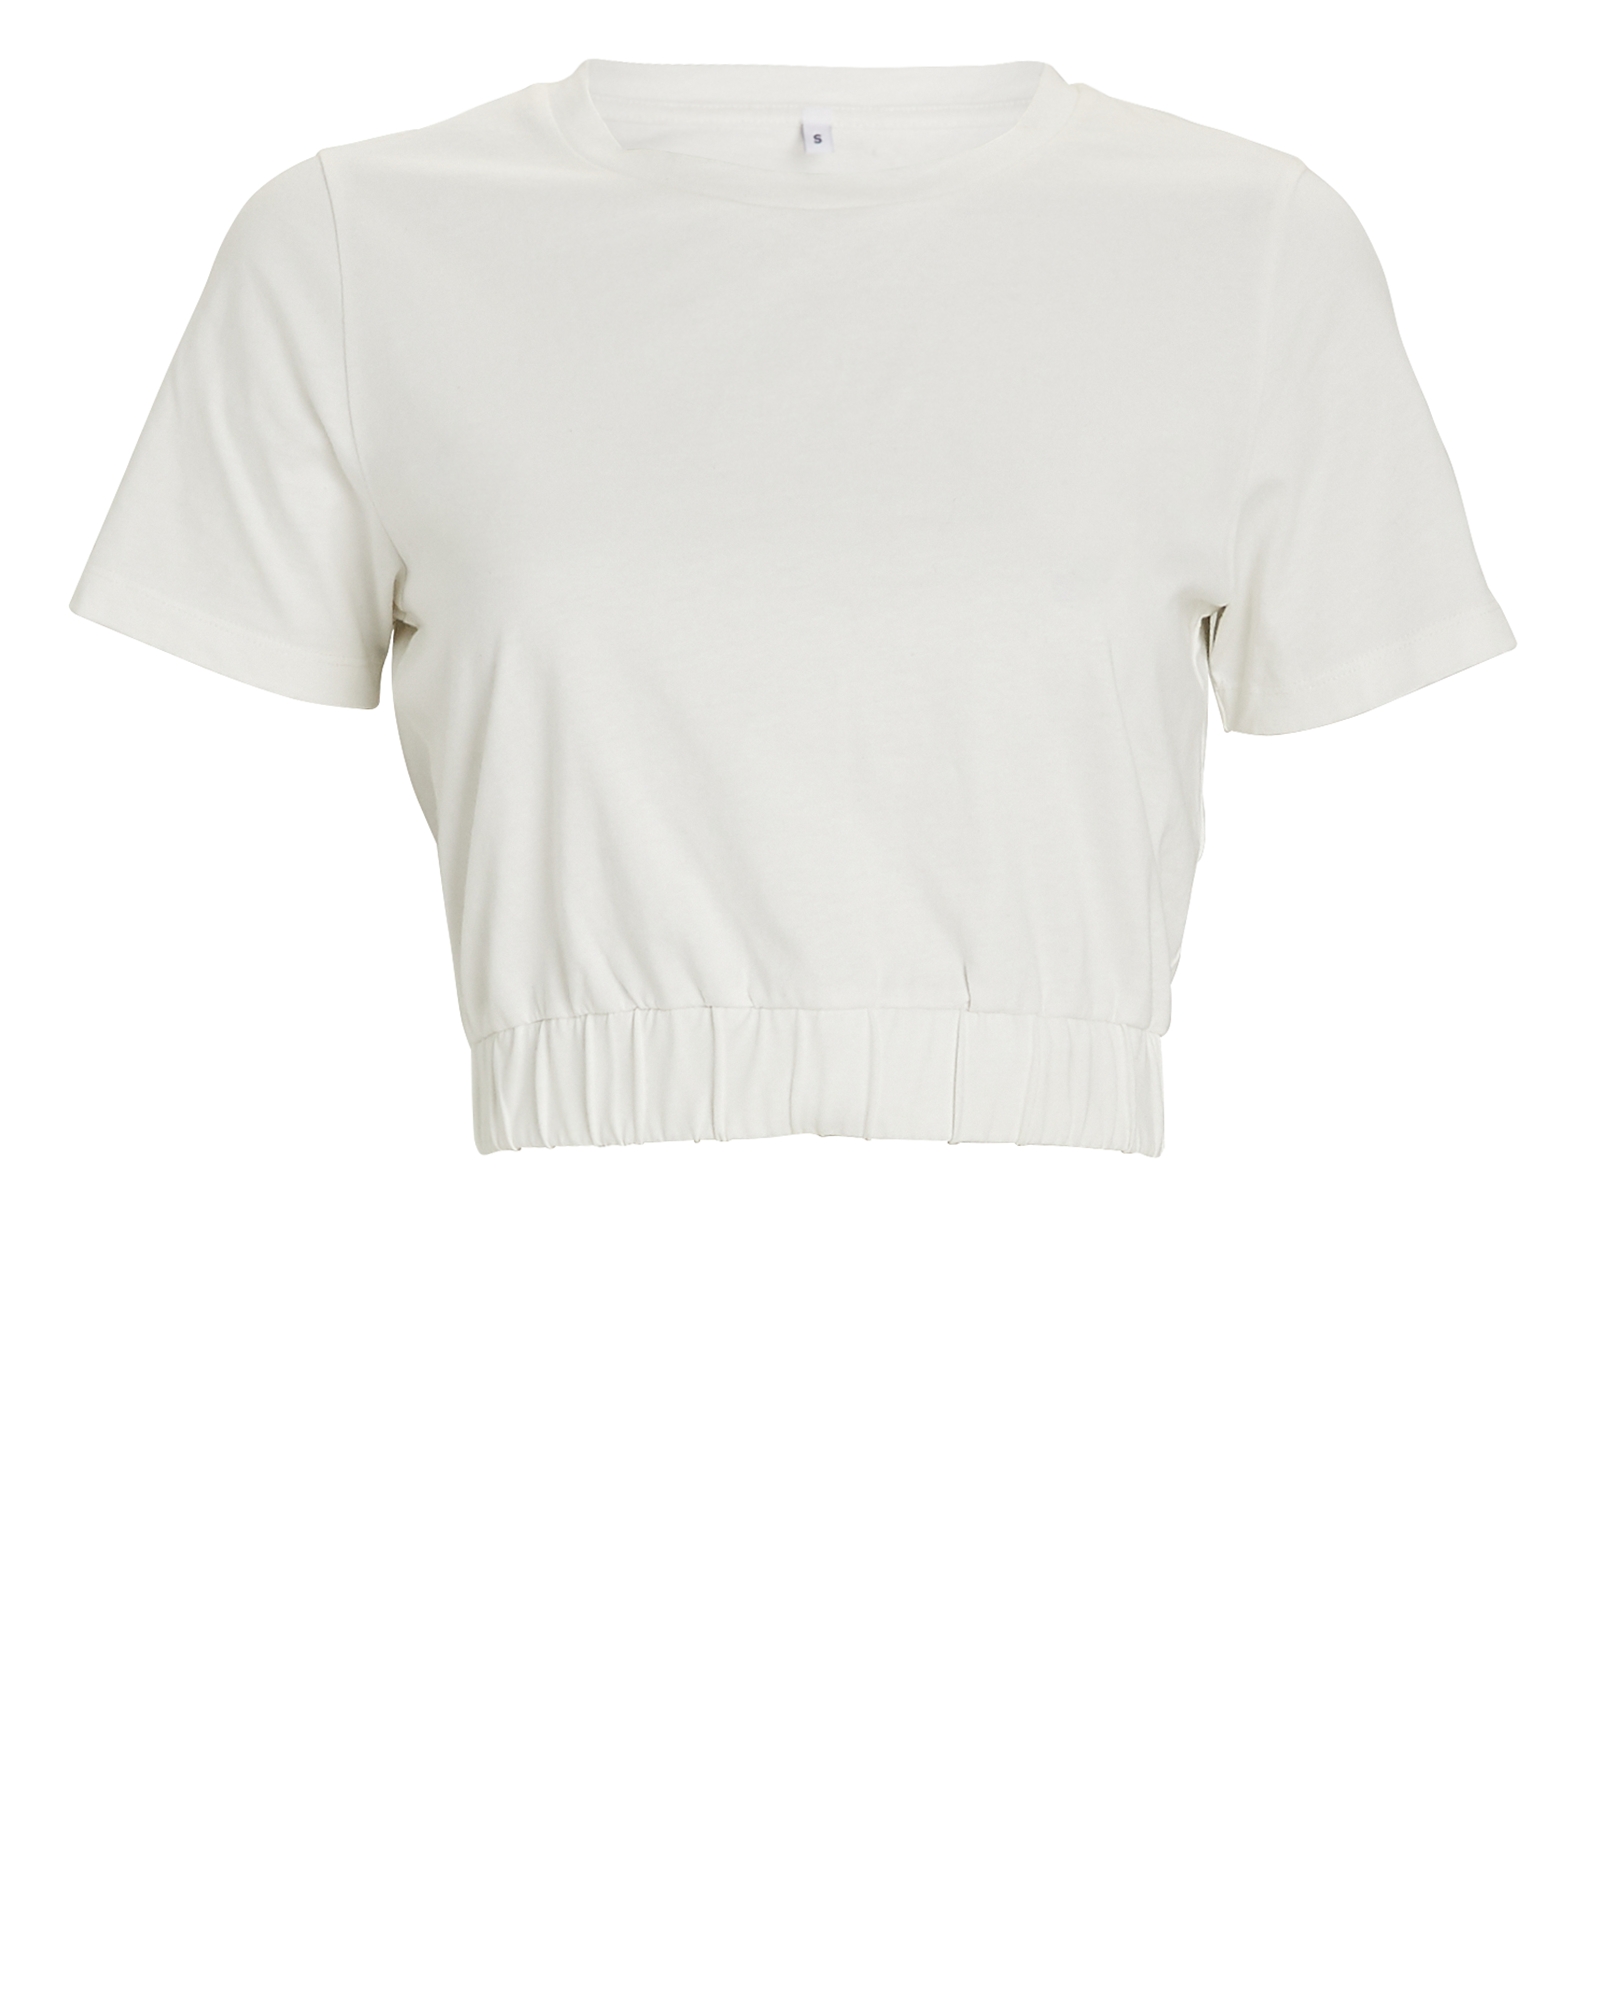 INTERMIX Private Label Cora Cropped Organic Cotton T-Shirt | INTERMIX®